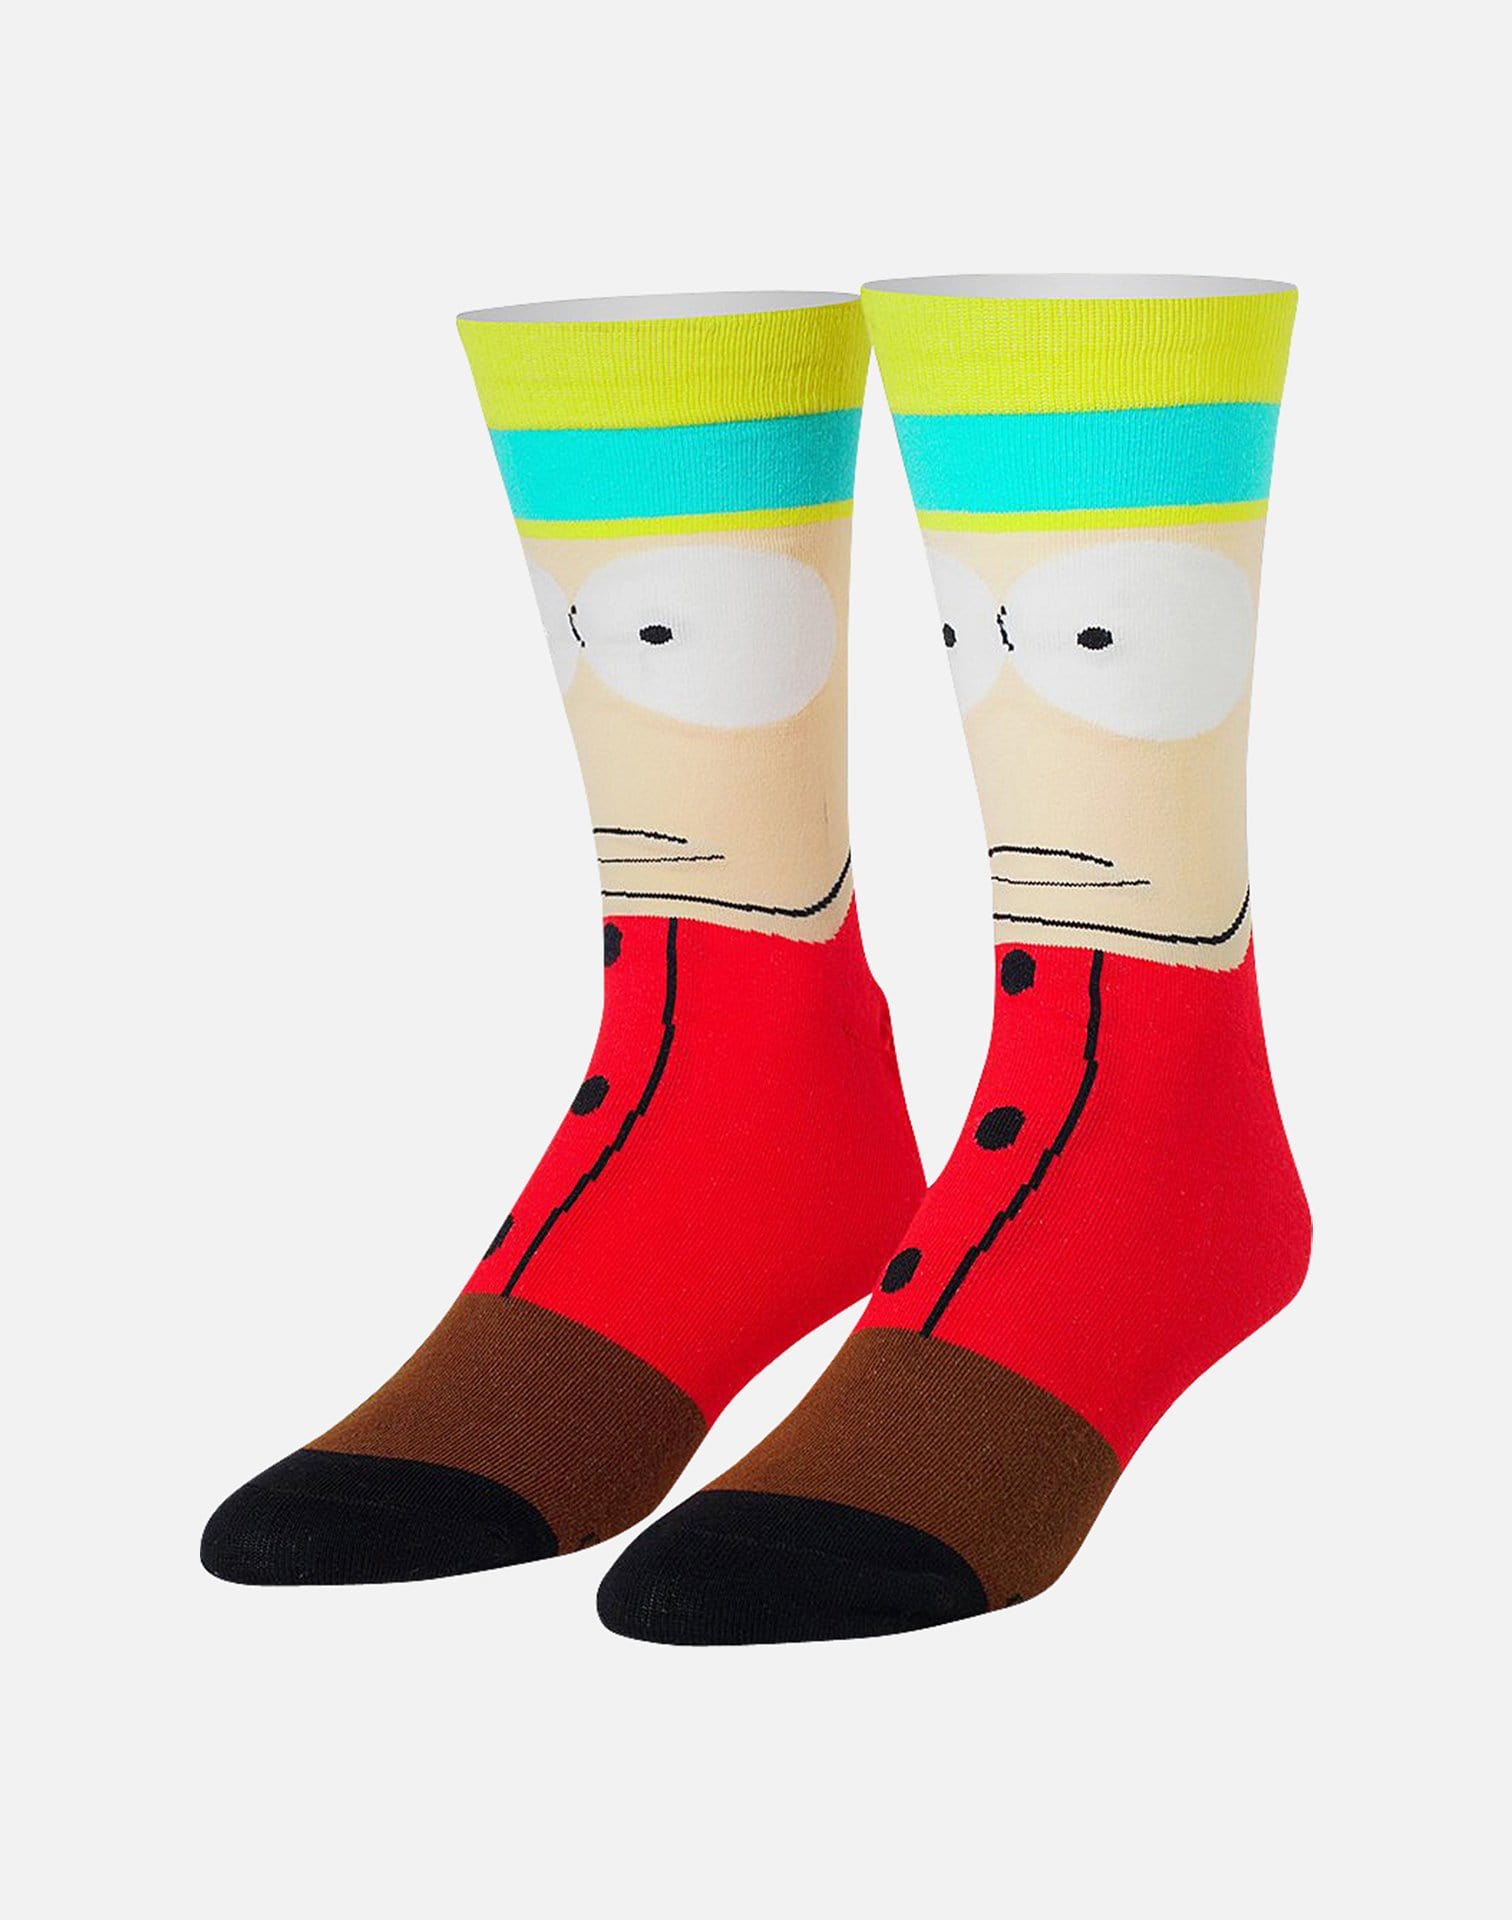 Odd Sox Eric Cartman Crew Socks